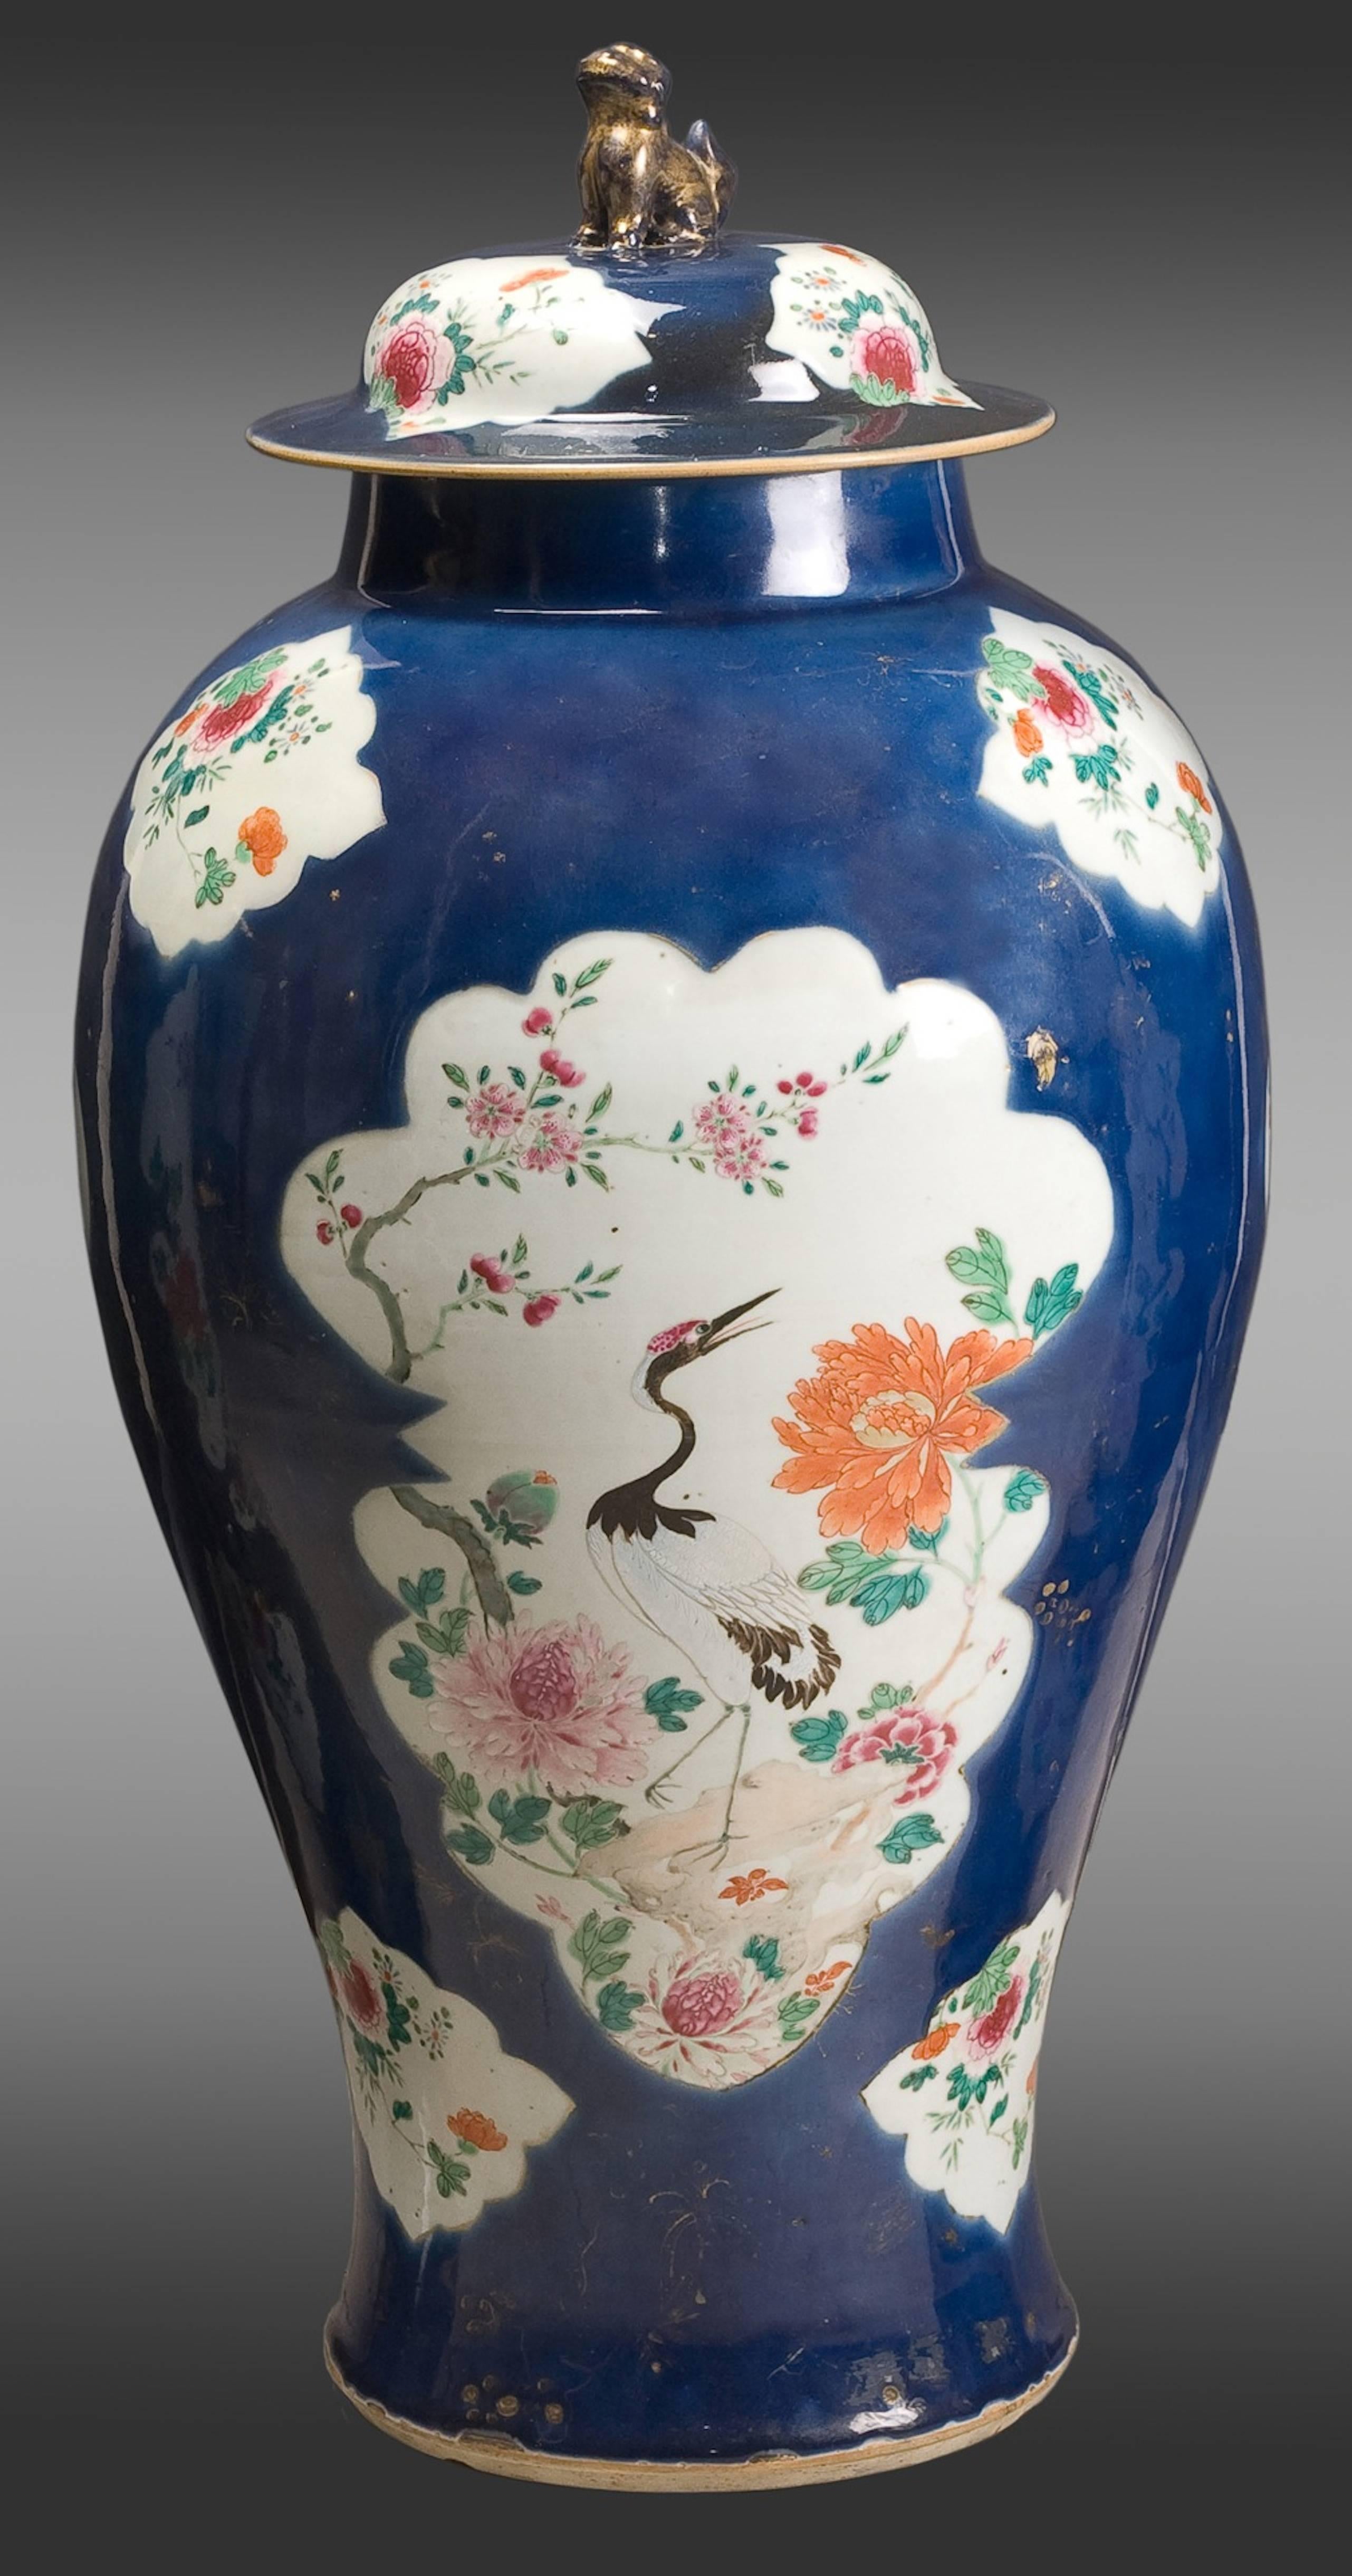 Set of two Trumpet vases and one covered jar. Kieng Lung Period (1735-1795).
Famille rose decoration on a power-blue ground.
(One trumpet vase restored).

Measures: Height: Jar 70cm. / Vases 60cm.
Diameter: Jar 35cm. / Vases 26cm.